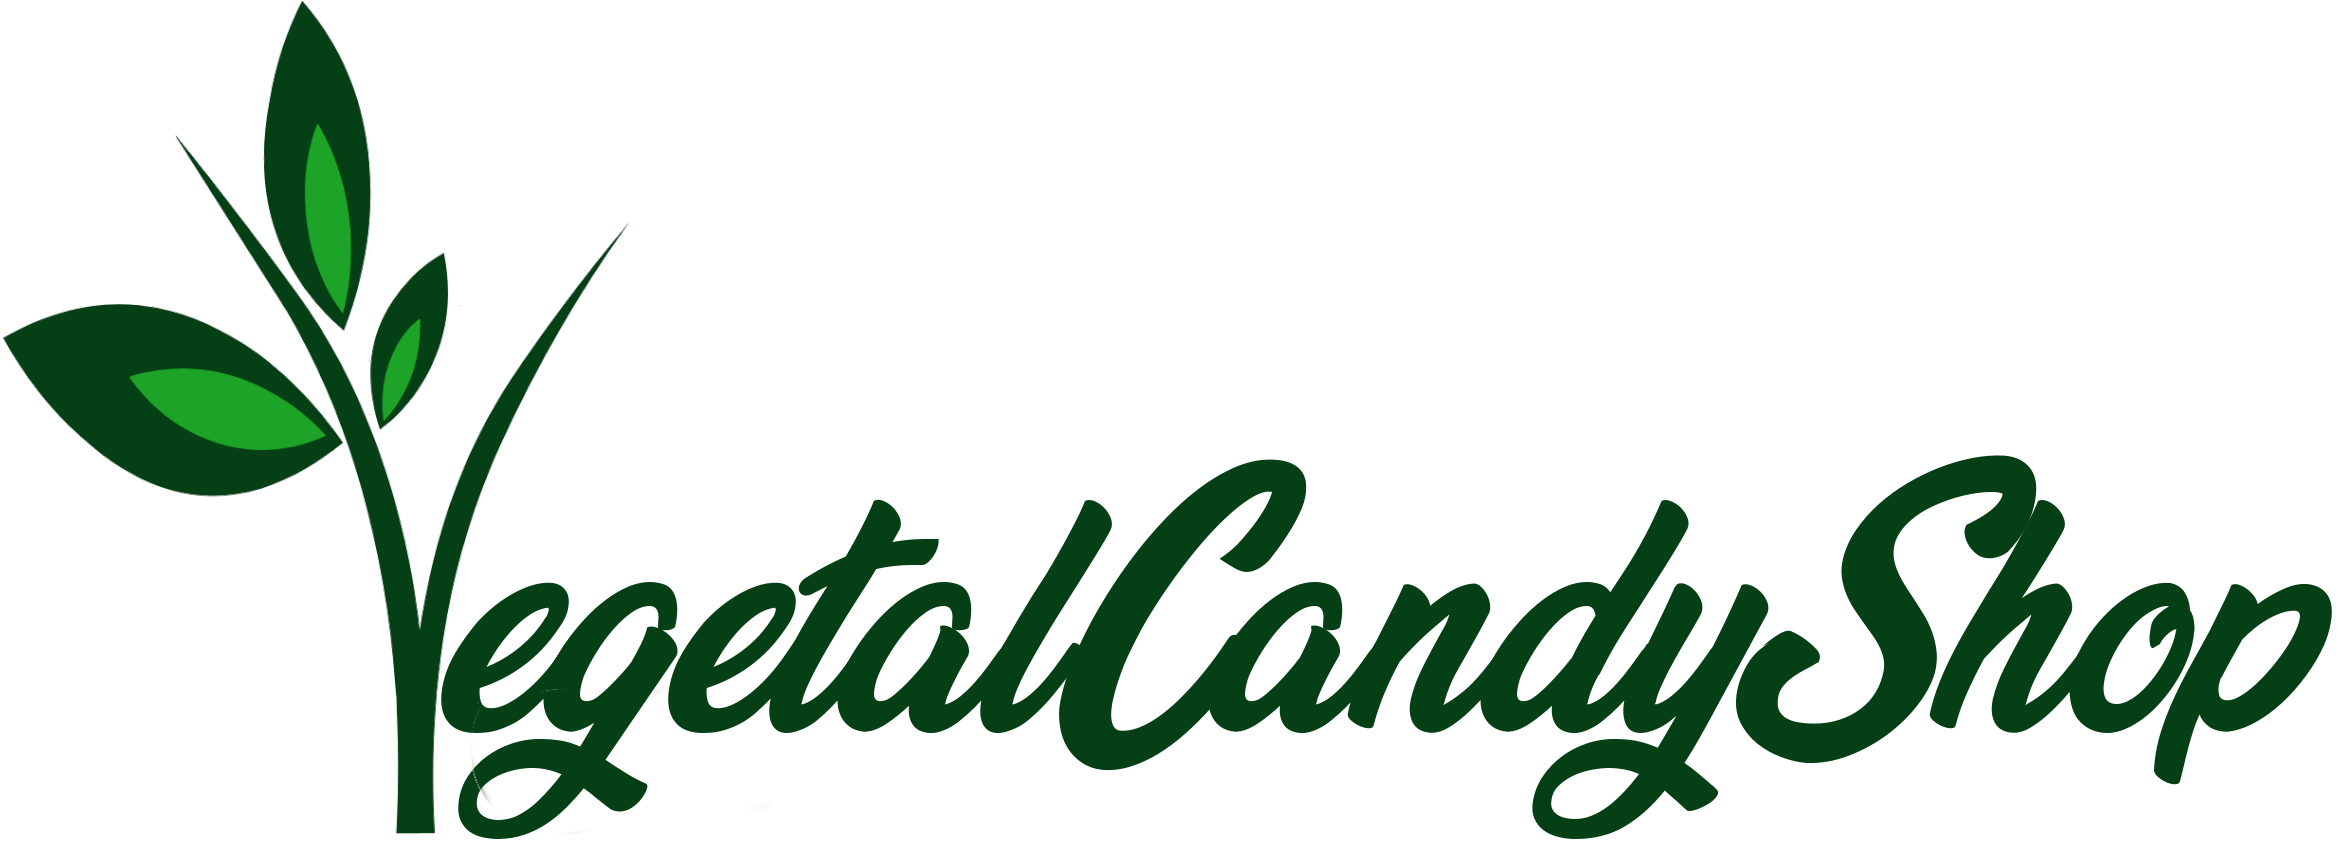 Logo Vegetal Candy Shop